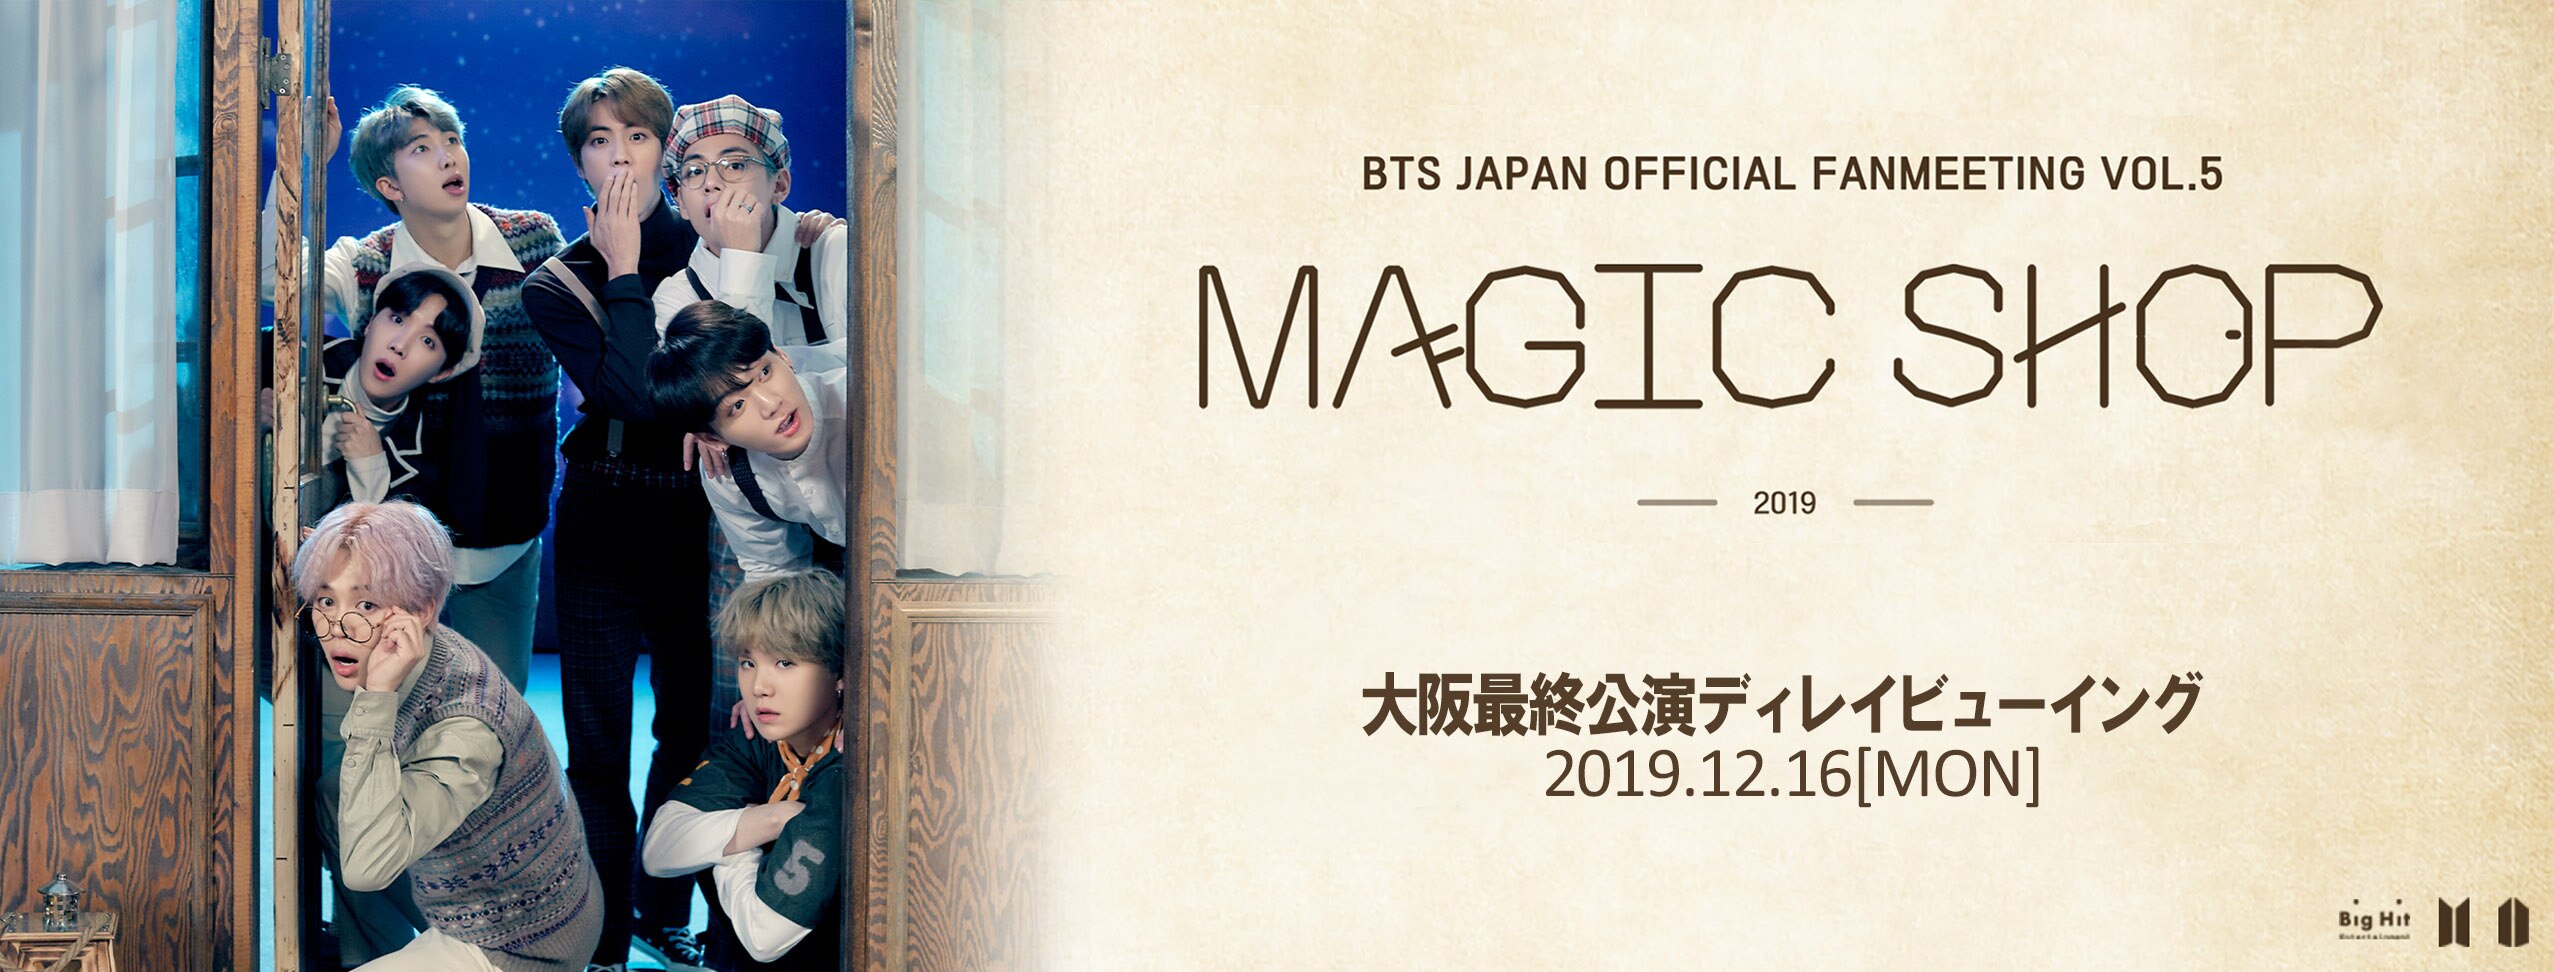 BTS JAPAN OFFICIAL FANMEETING VOL.5 [ MAGIC SHOP ]大阪公演ディレイ ...